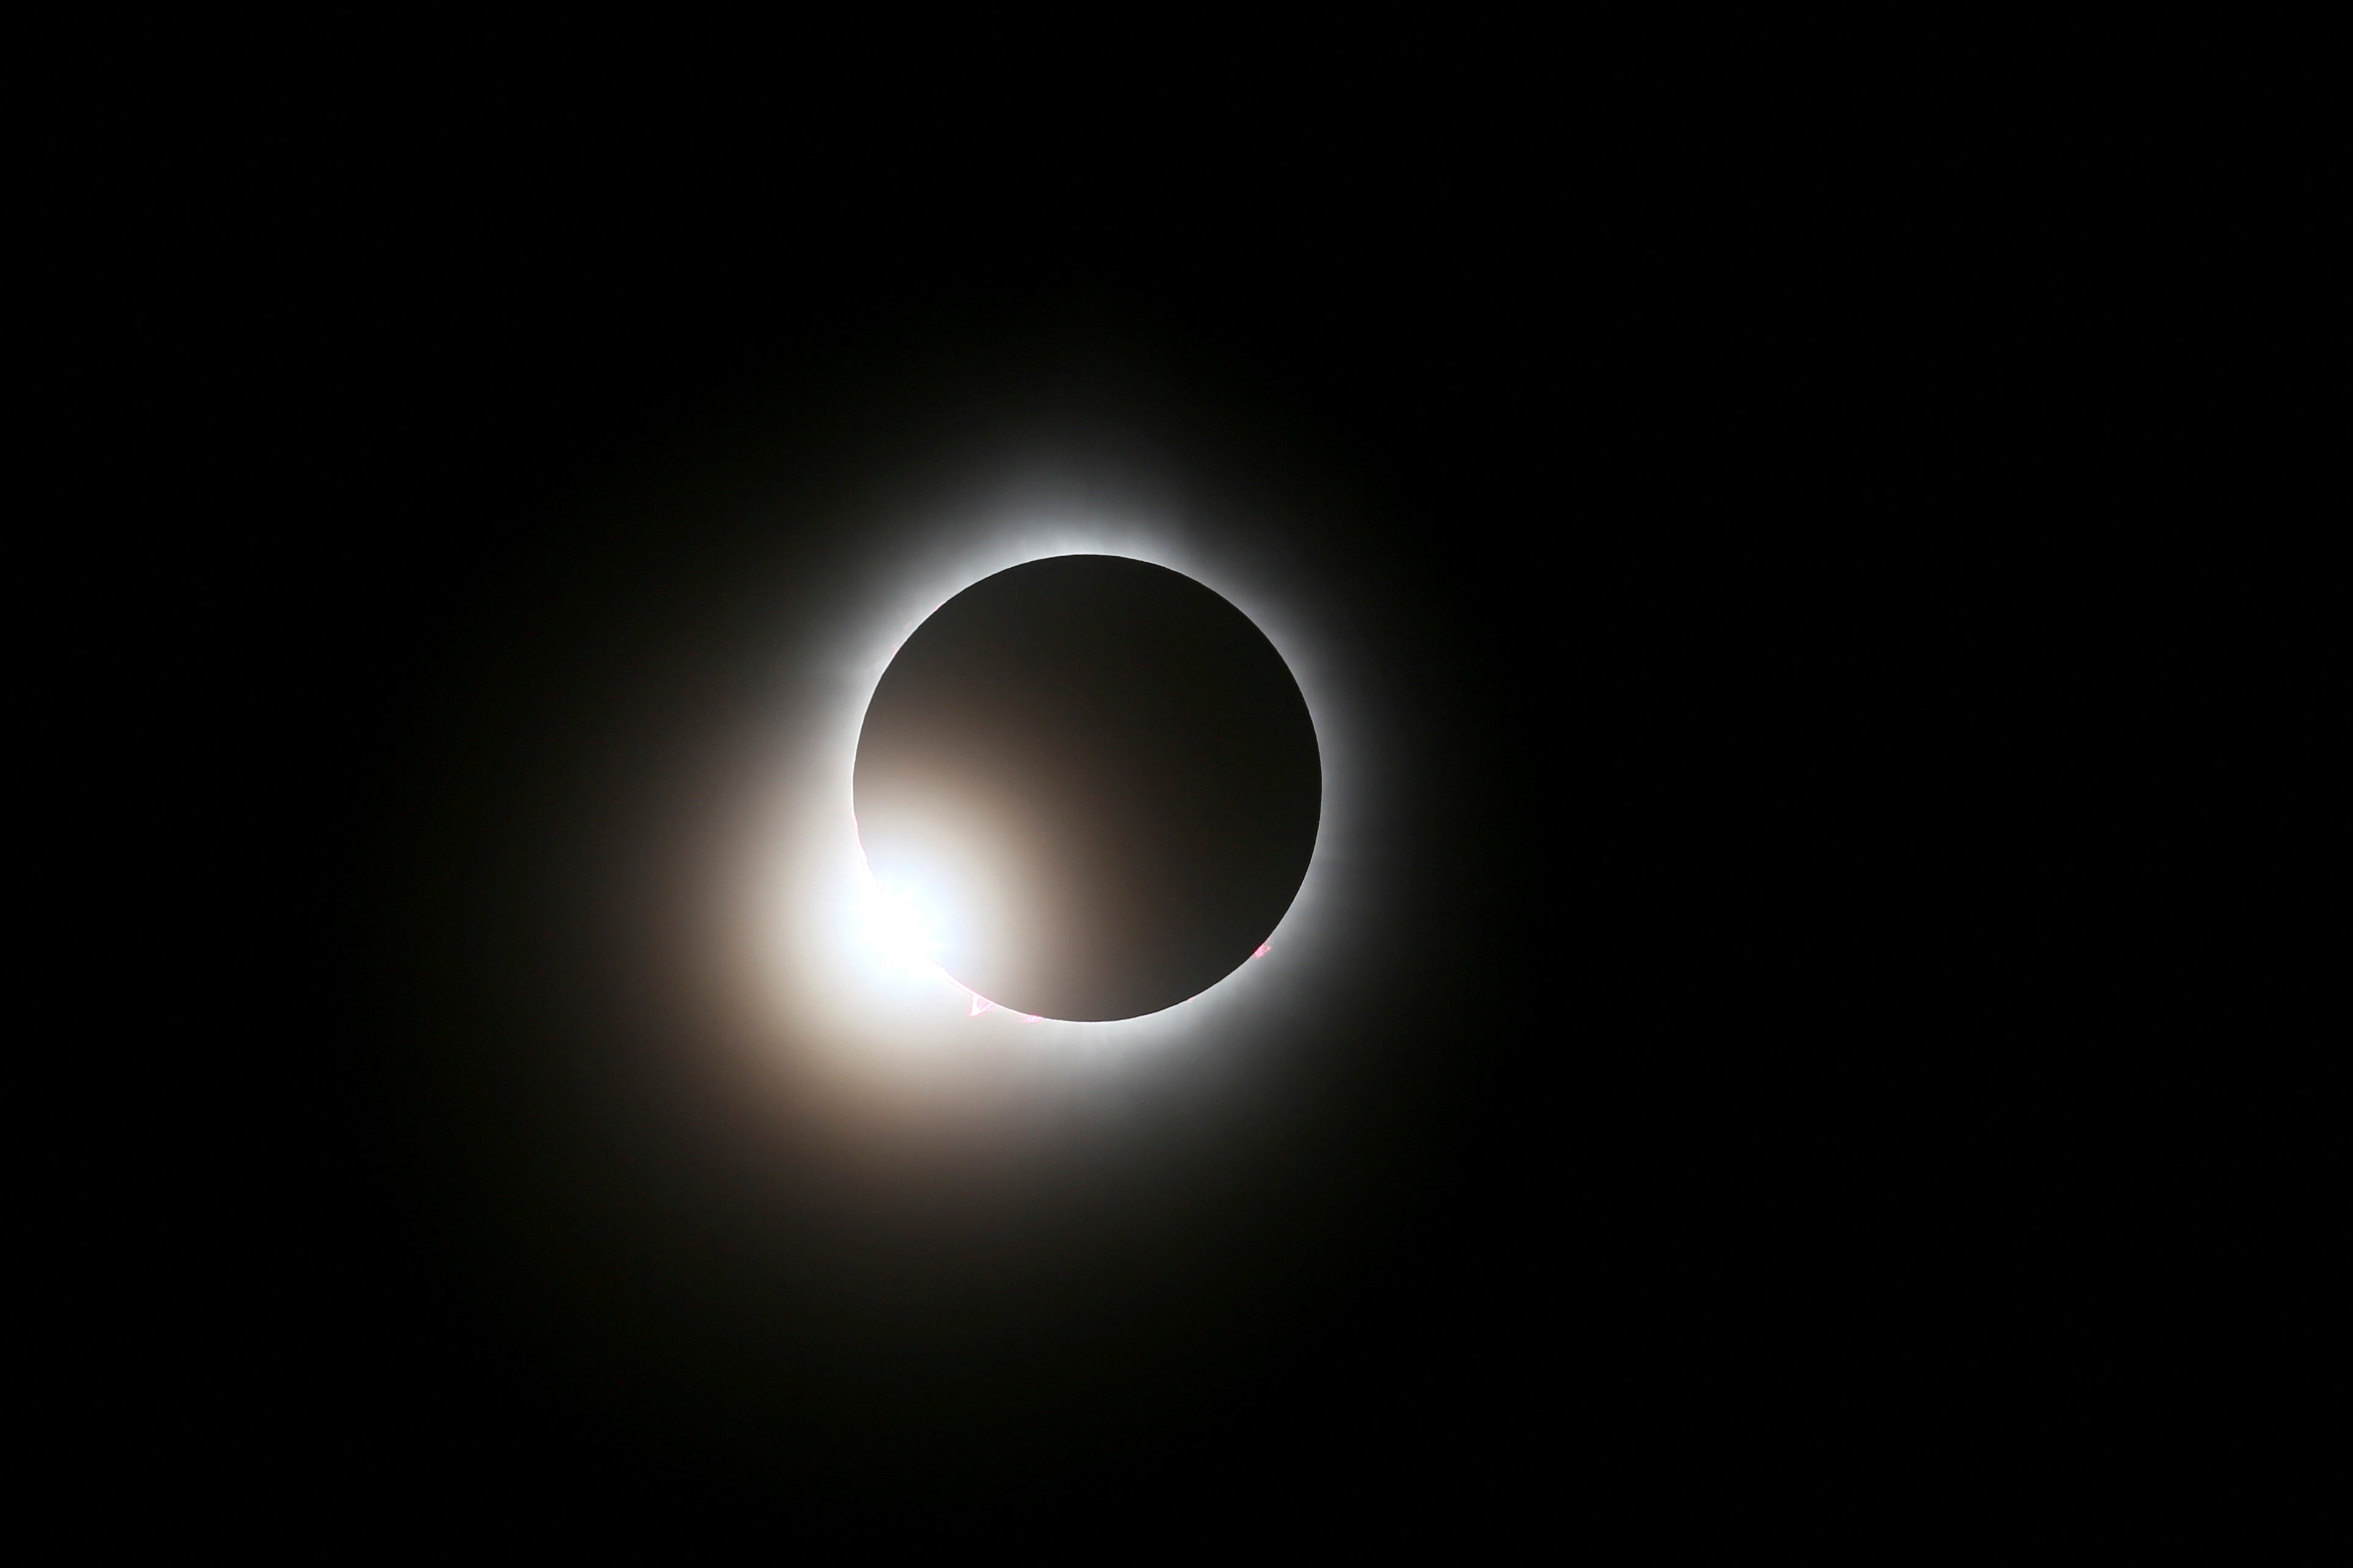 The eclipse passes through totality at Sugarbush ski resort in Warren, Vermont